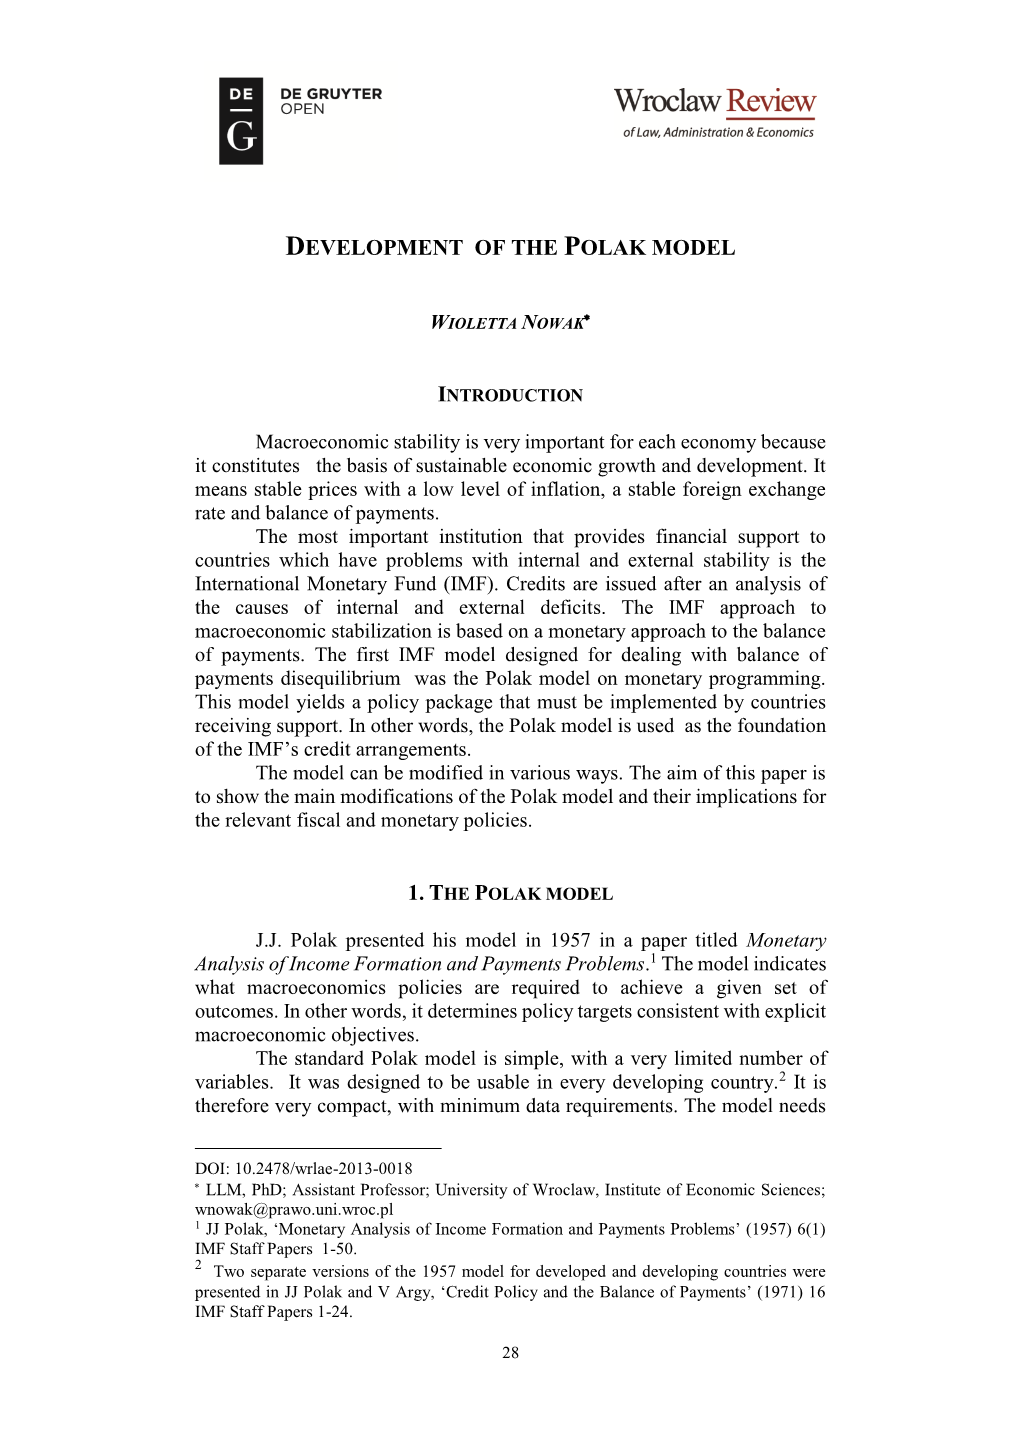 Development of the Polak Model